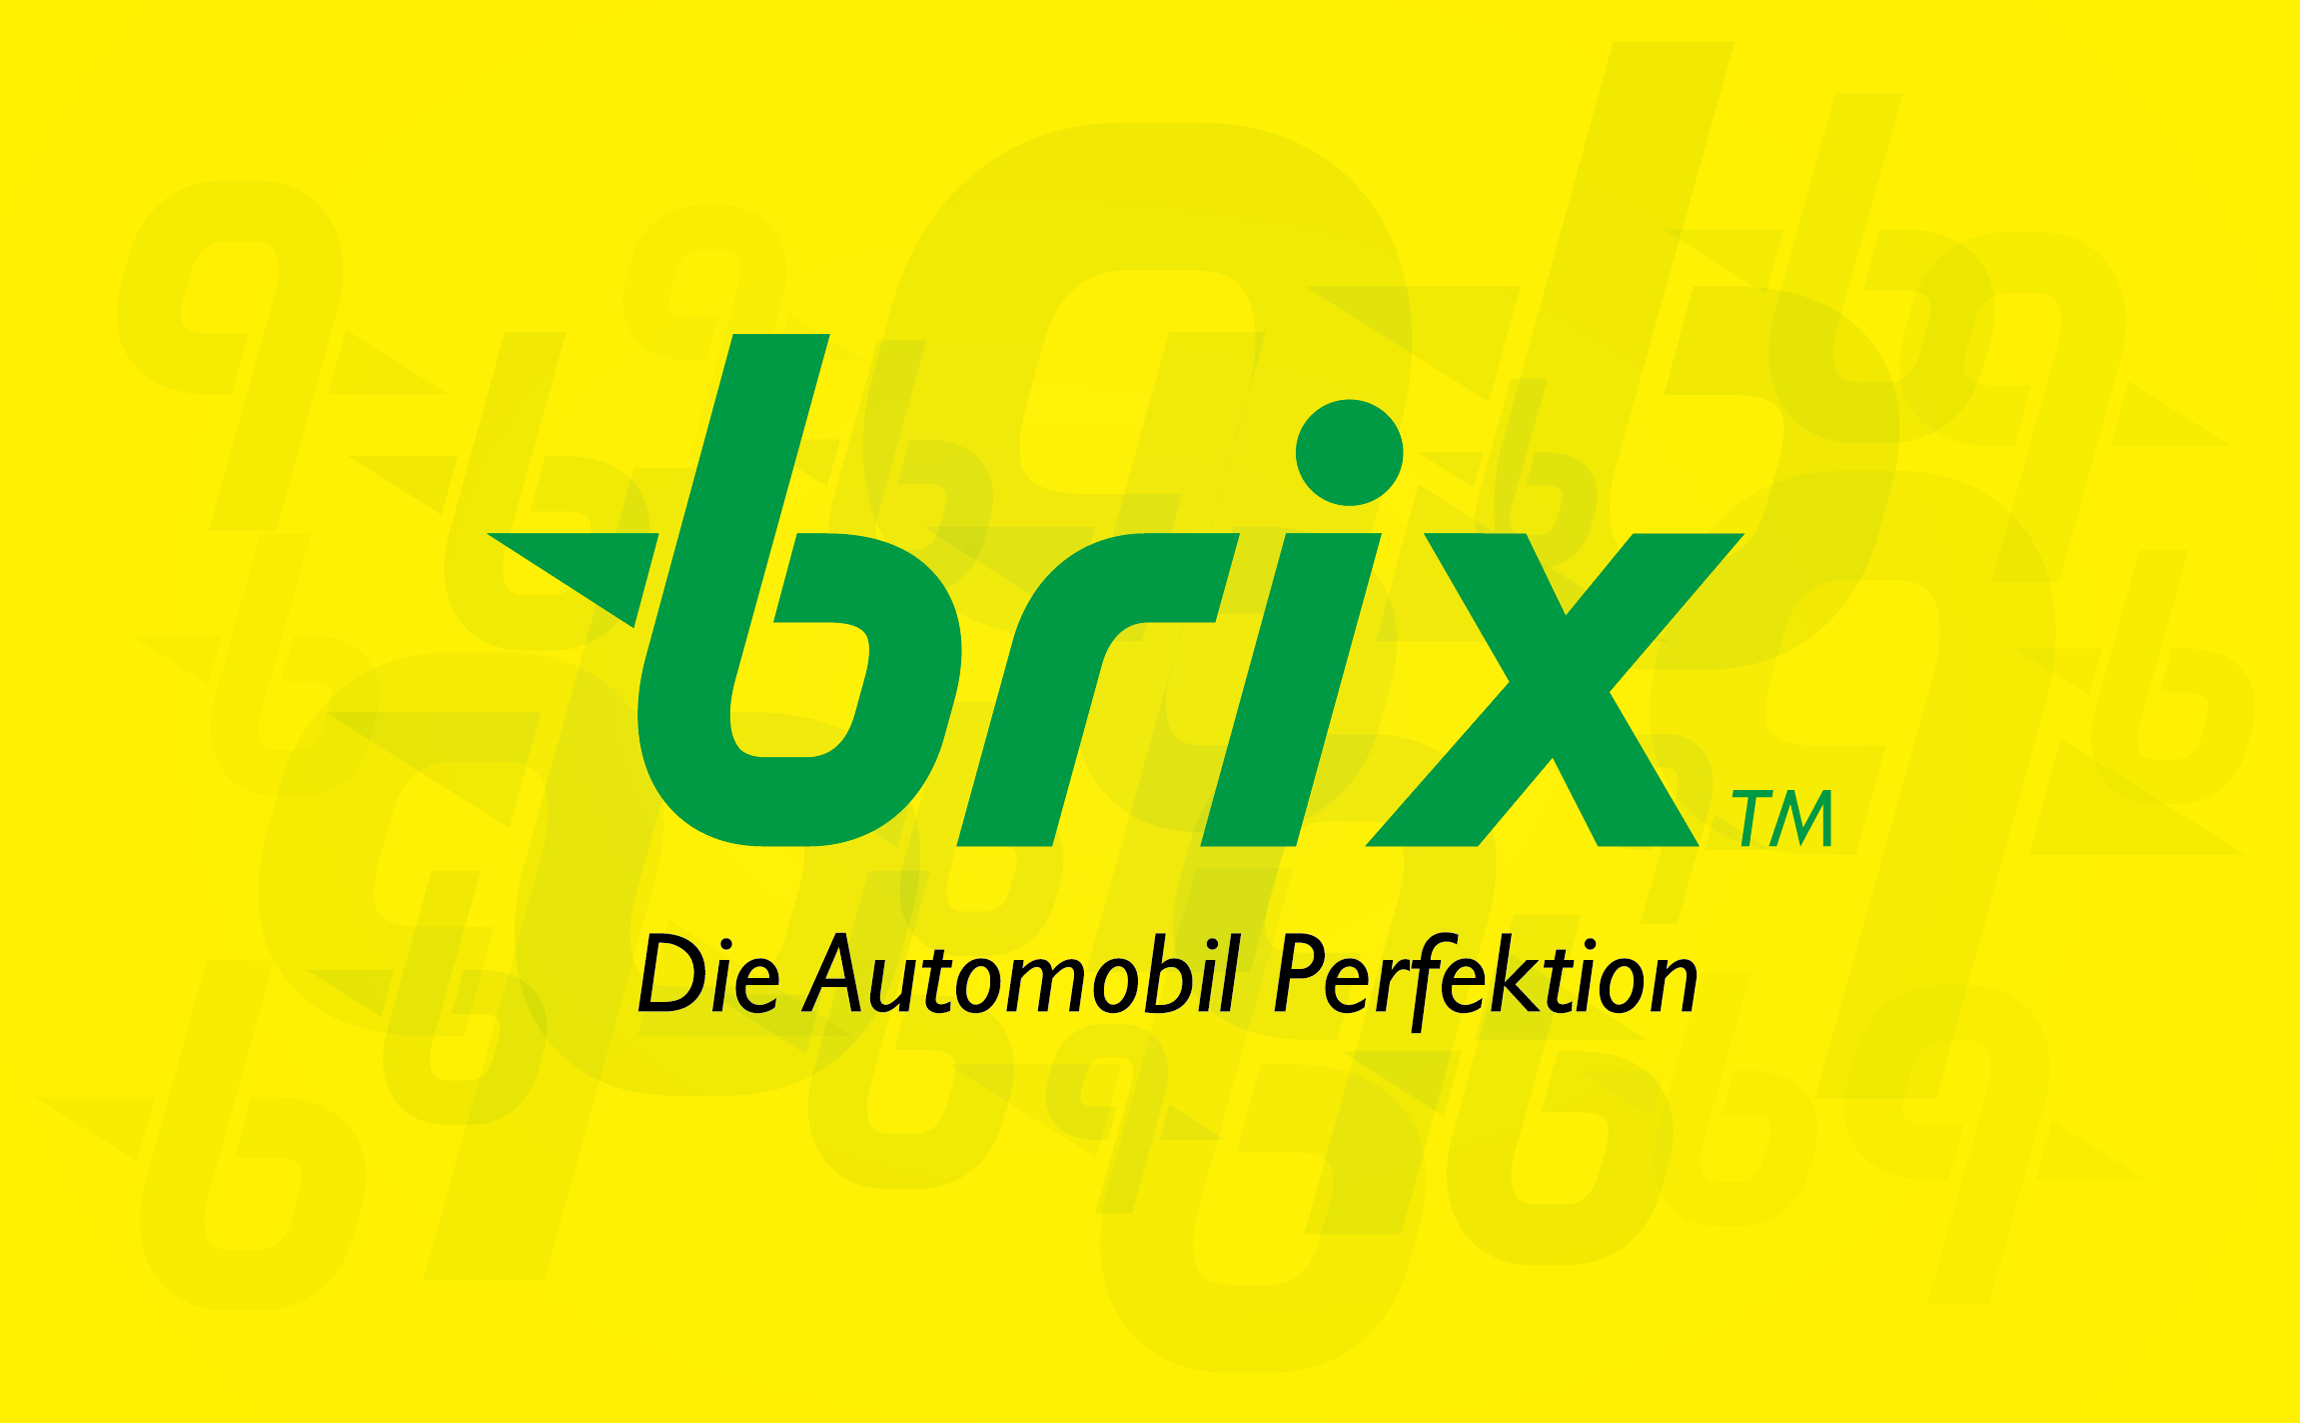 Brix Brake System DRI Branding & Identity